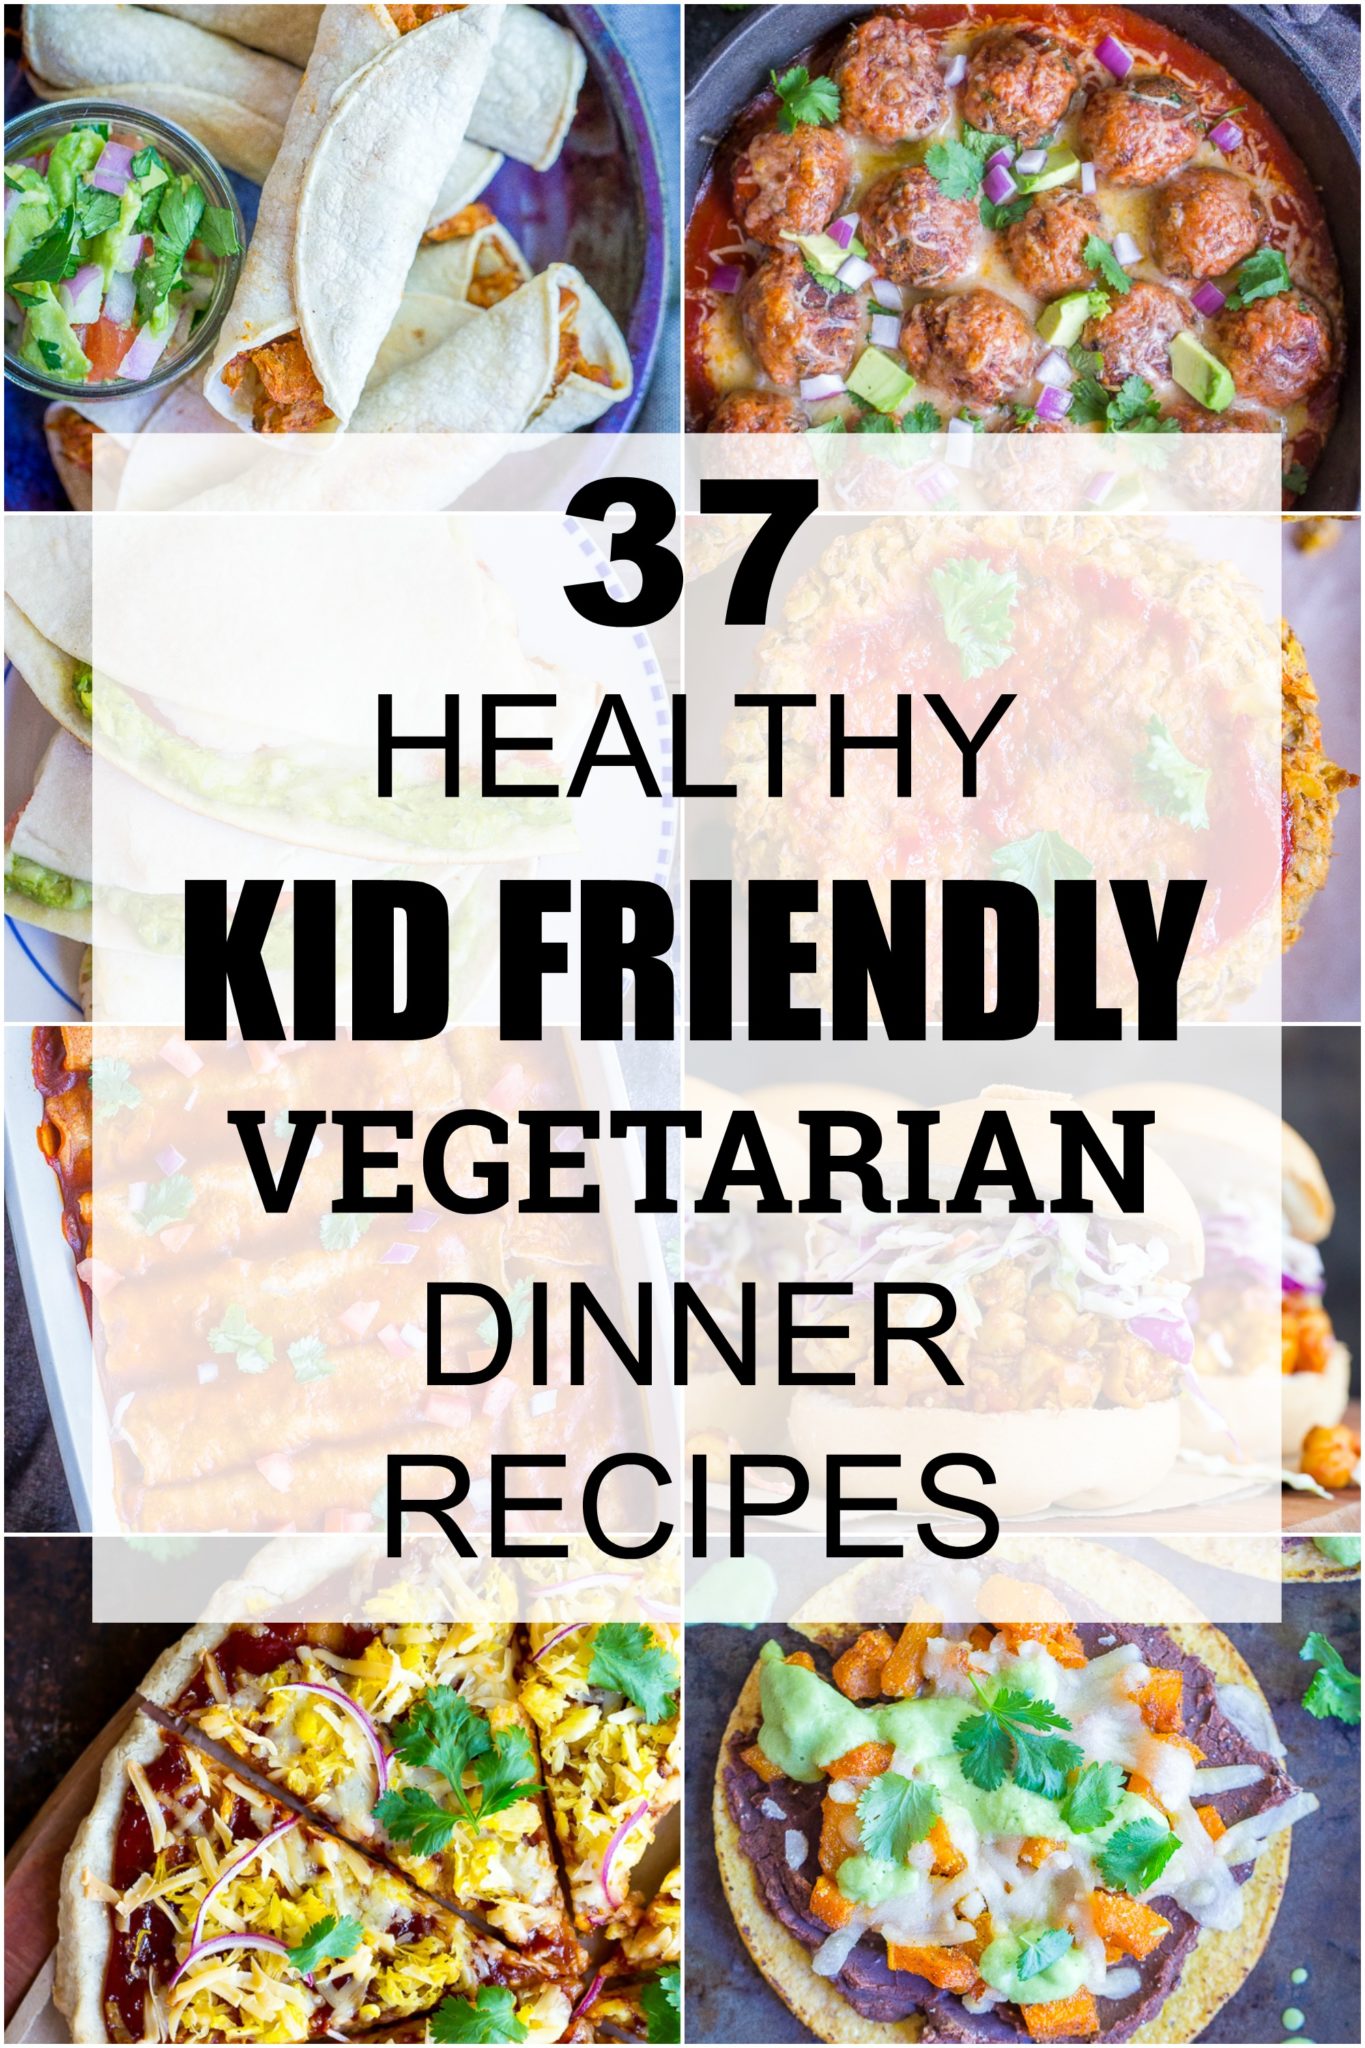 55 Best Dinner Ideas for Kids - Quick Kids' Dinner Recipes